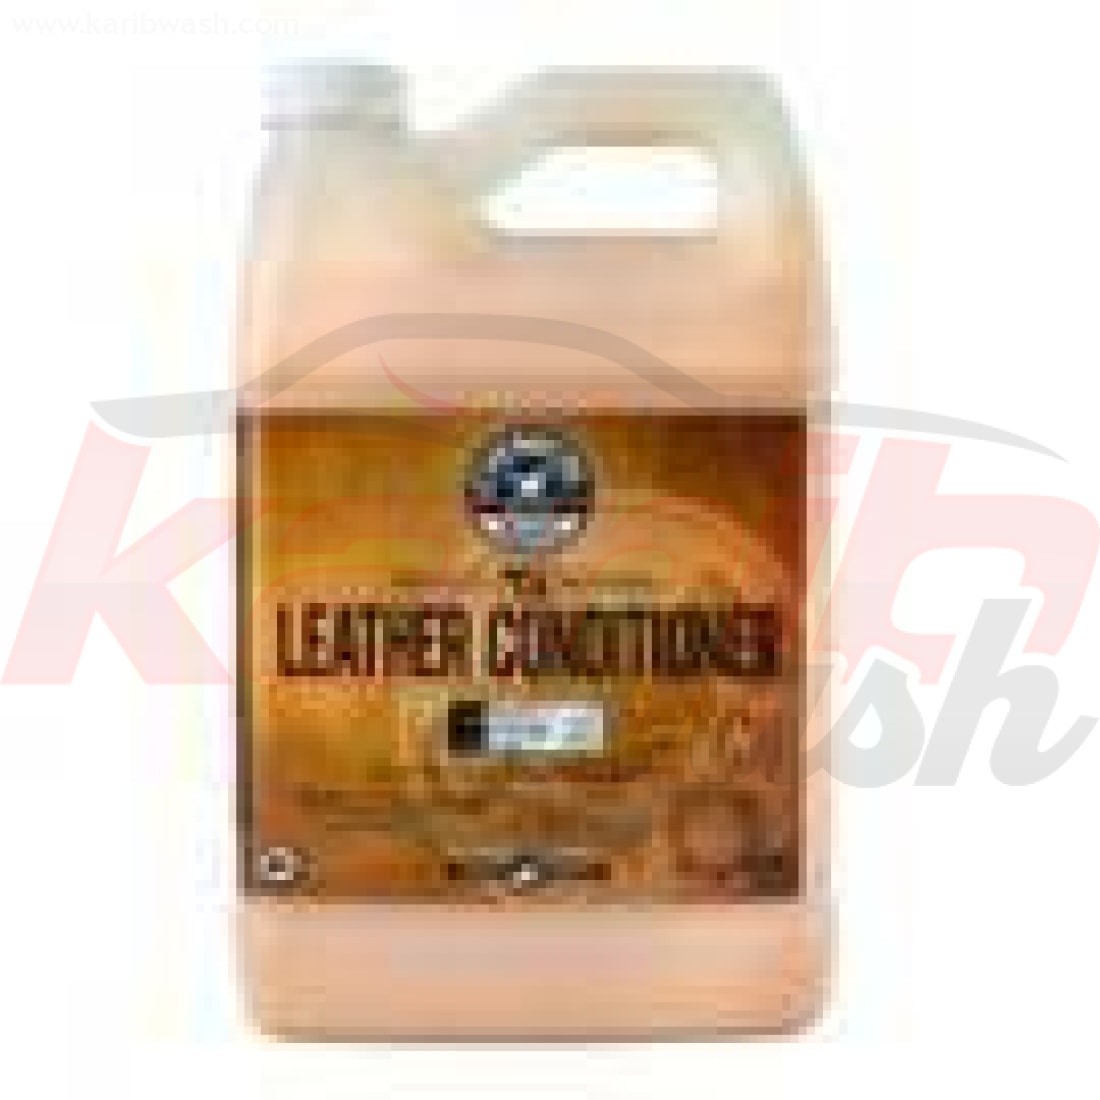 Leather Conditioner - CHEMICAL GUYS - KARIBWASH